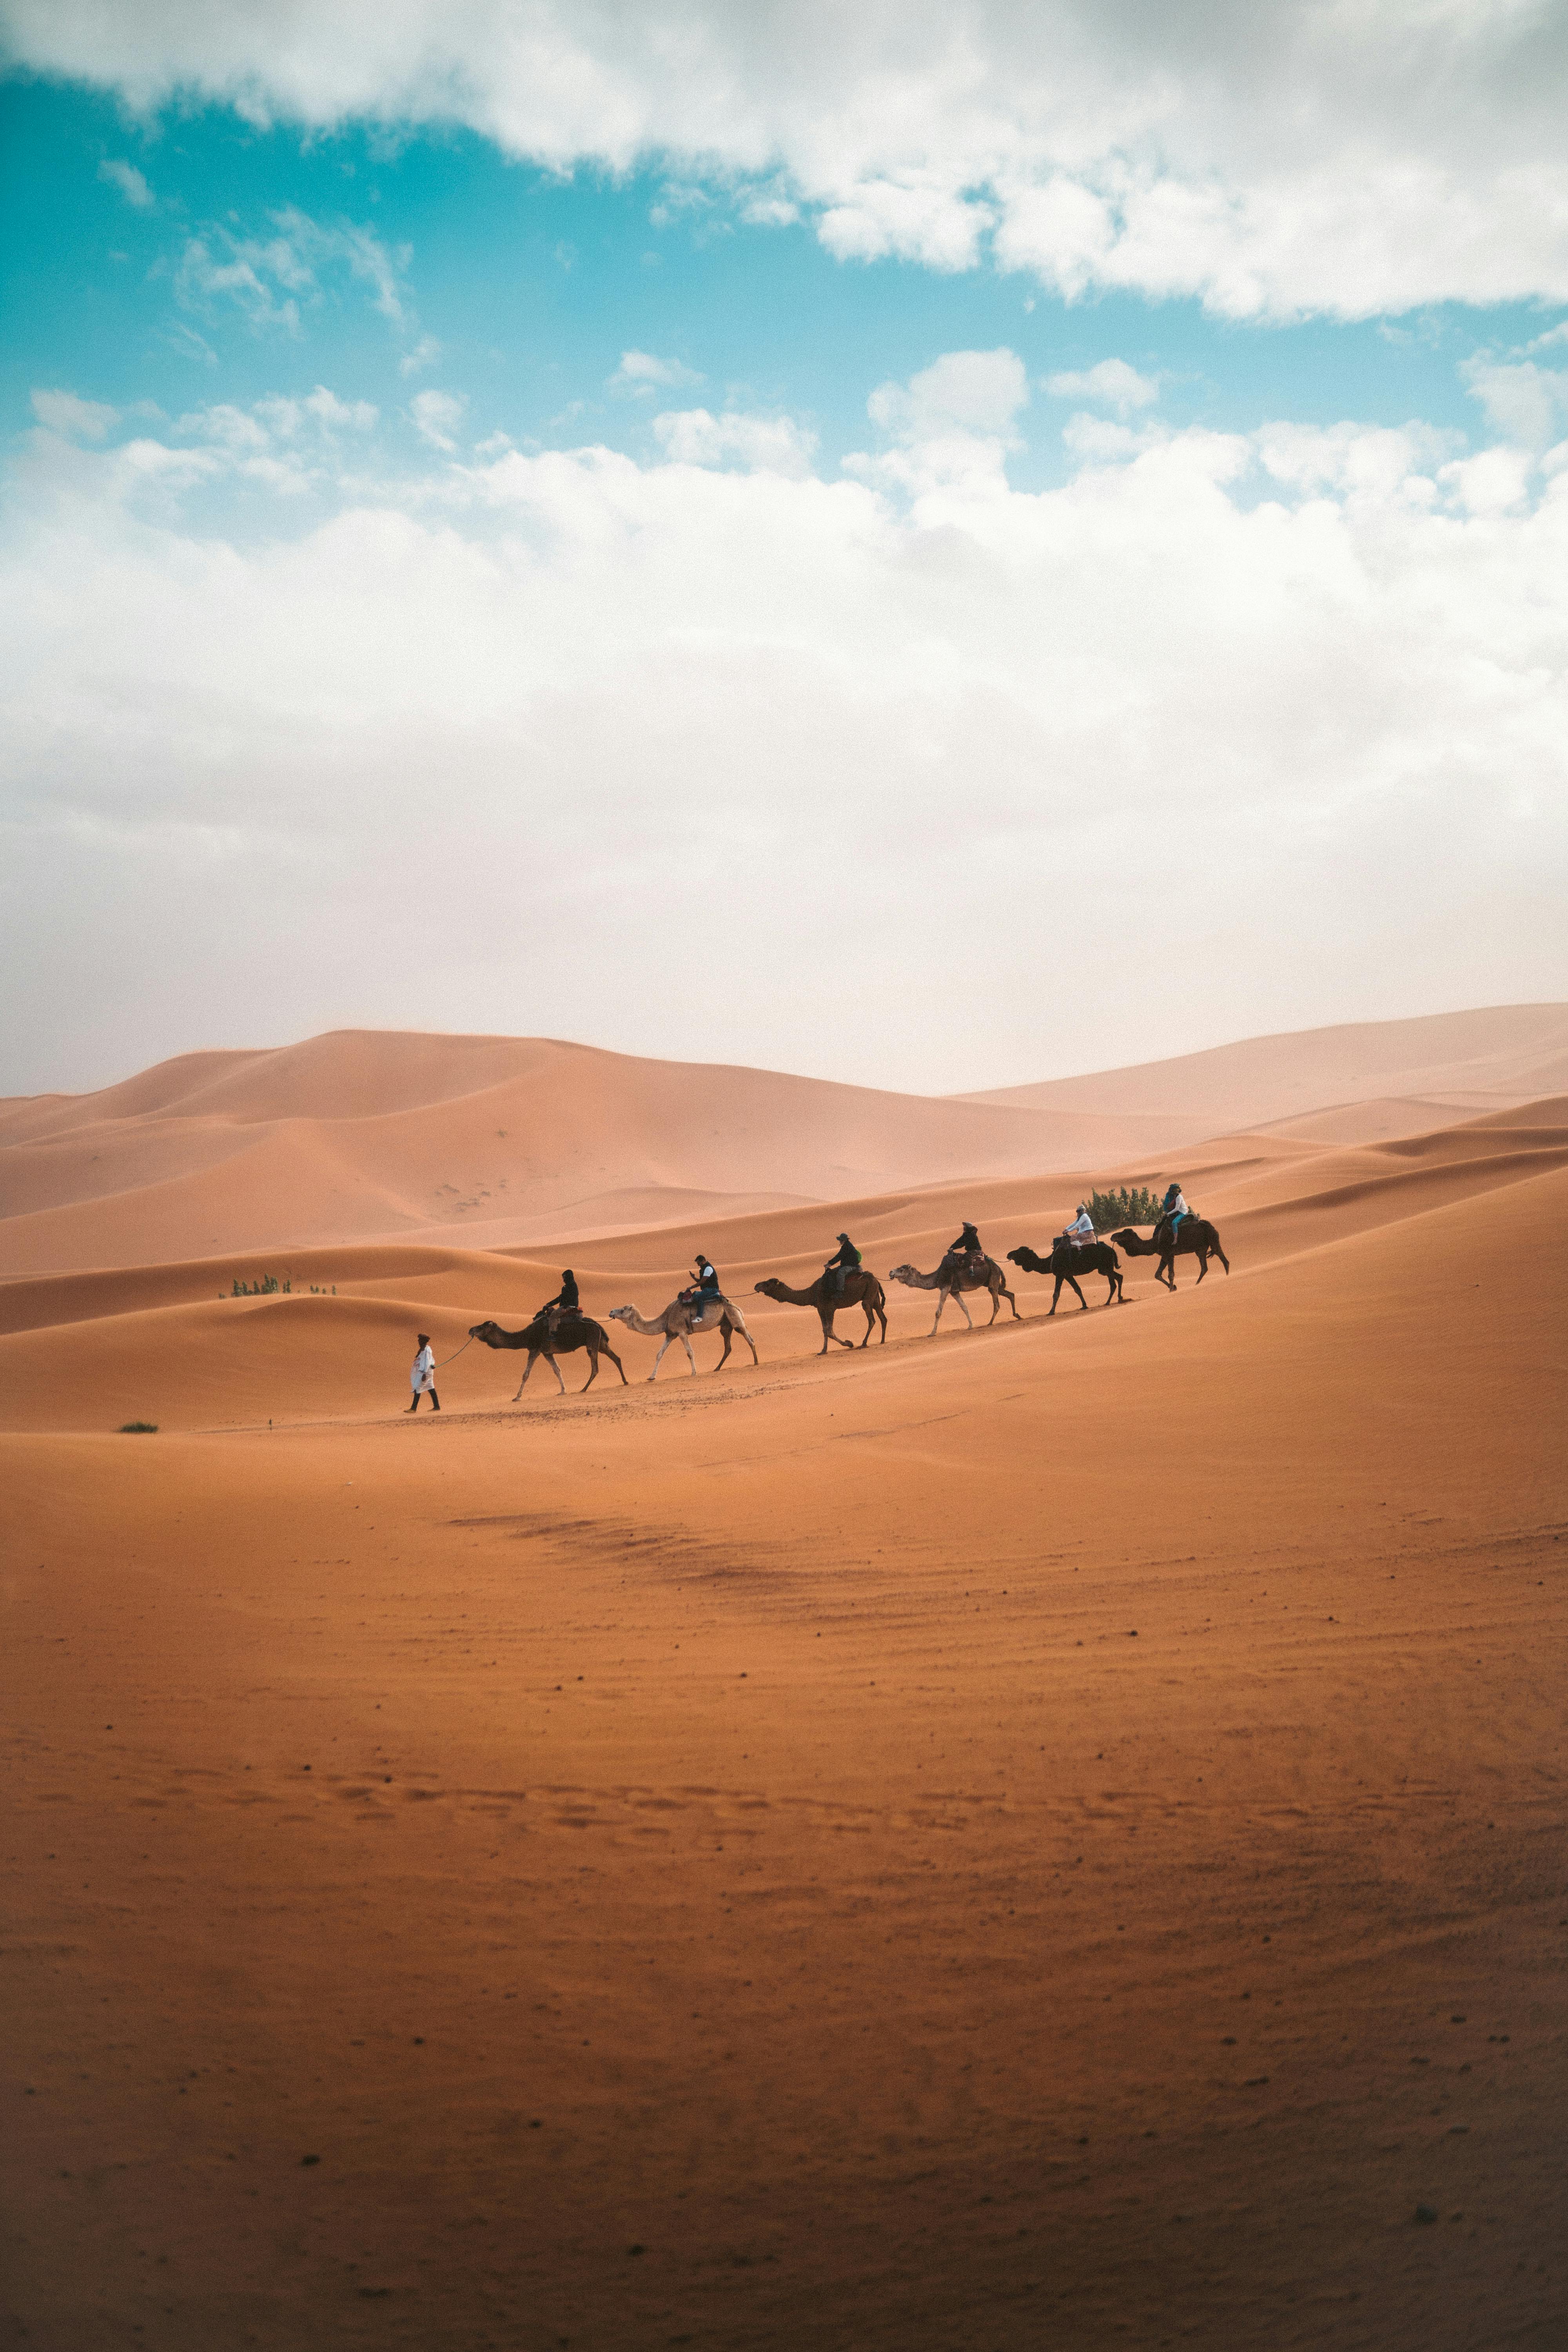 Wallpaper ID 227190  camel animal wild and desert hd 4k wallpaper free  download